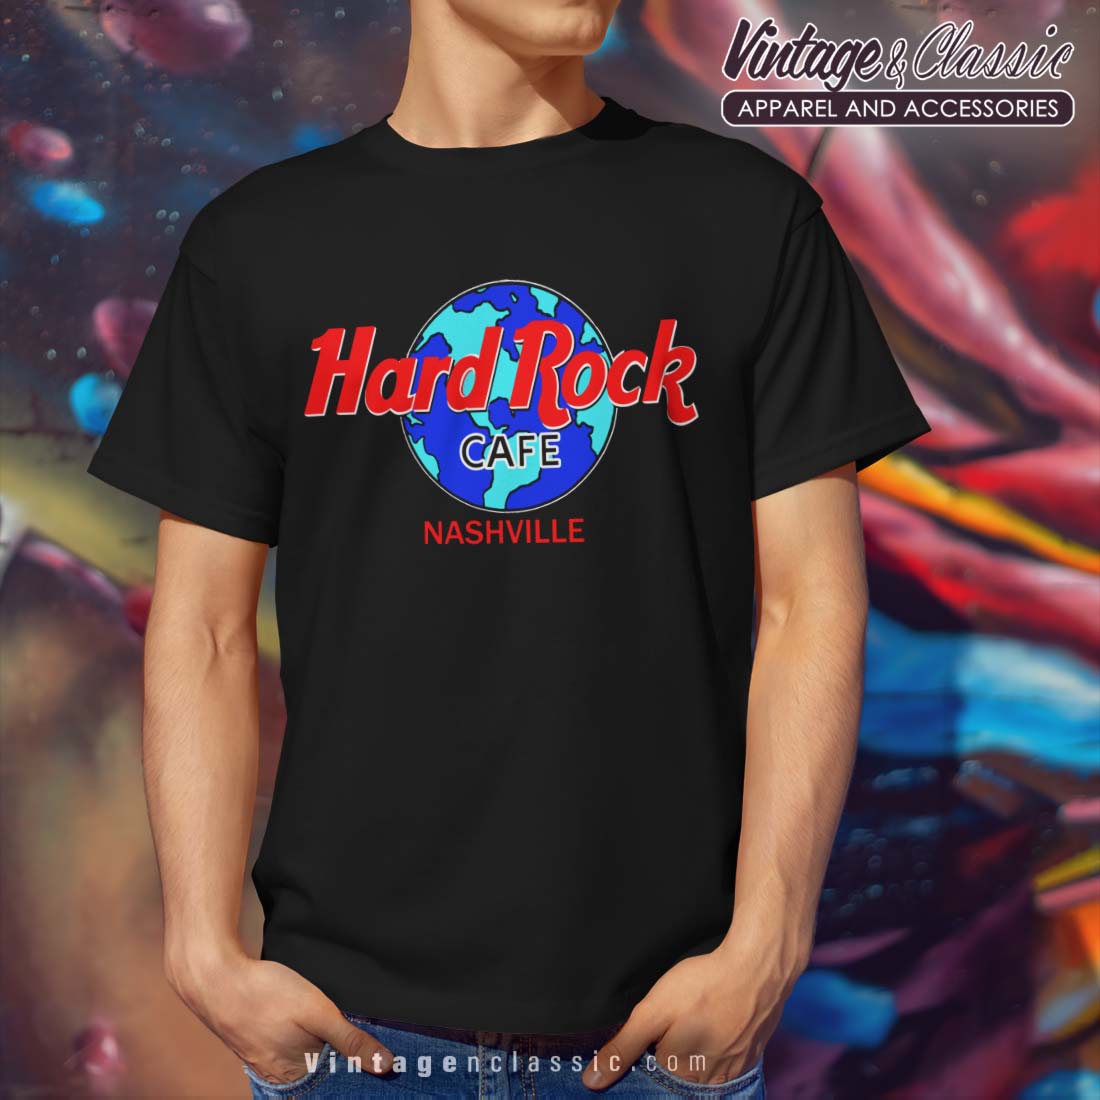 Hard Rock Cafe Nashville Shirt High-Quality Printed Brand